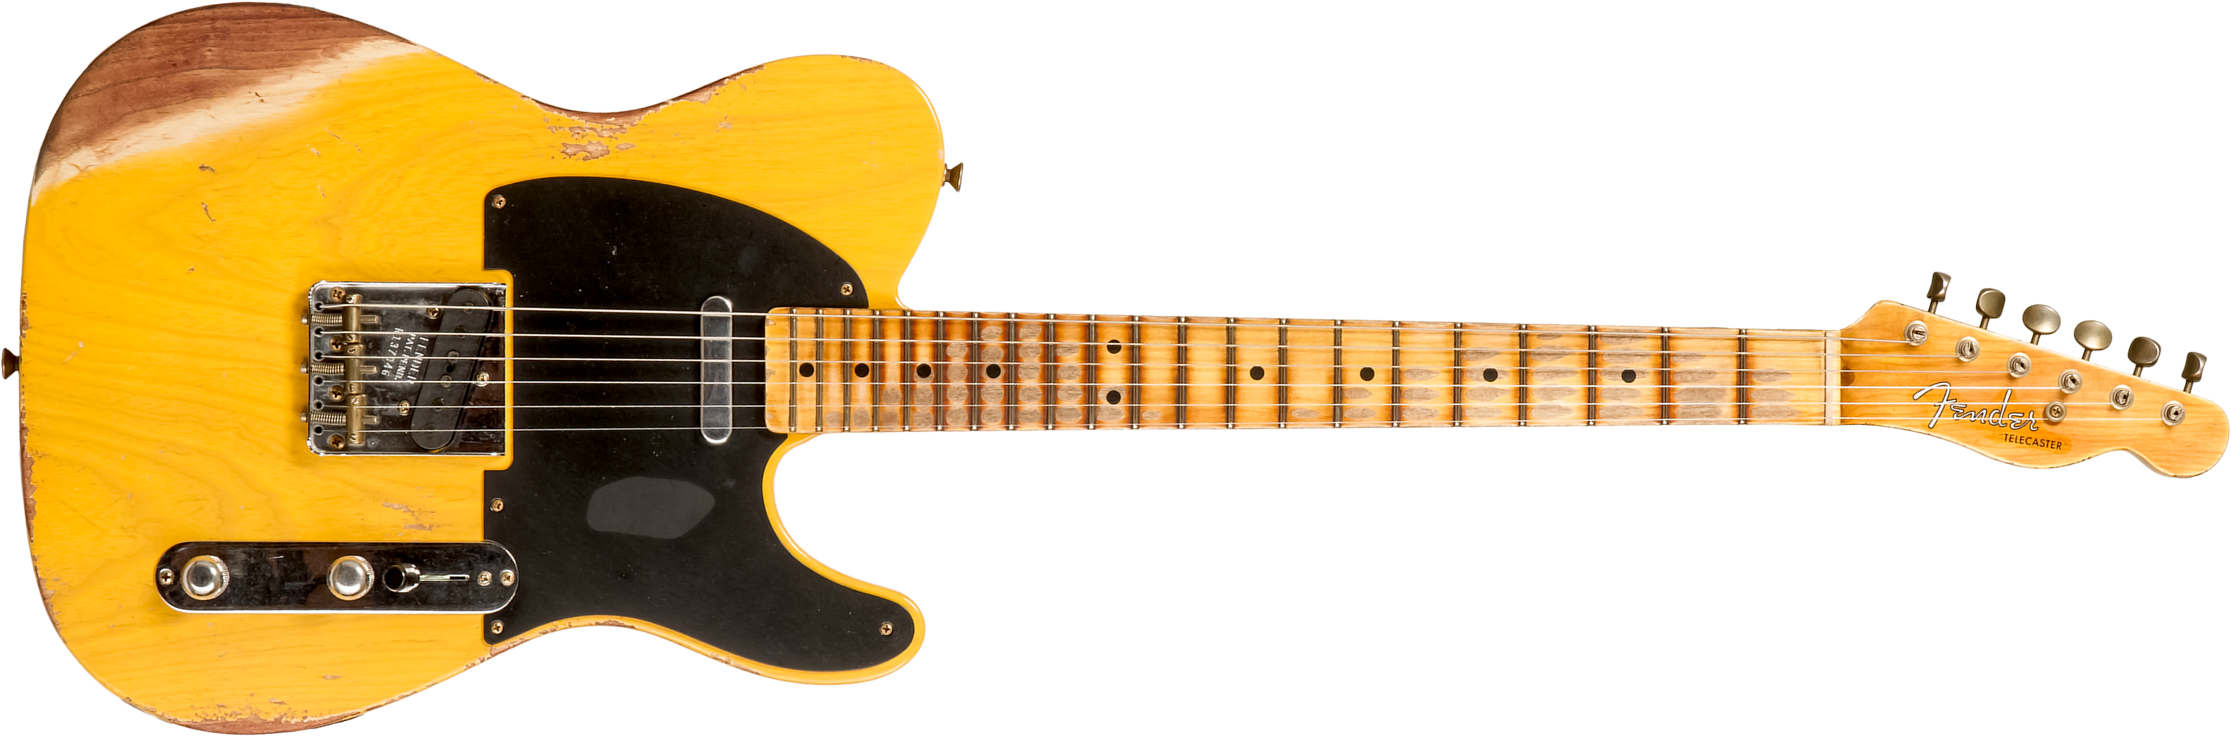 Fender Custom Shop Tele 1952 2s Ht Mn #r137046 - Butterscotch Blonde - Televorm elektrische gitaar - Main picture